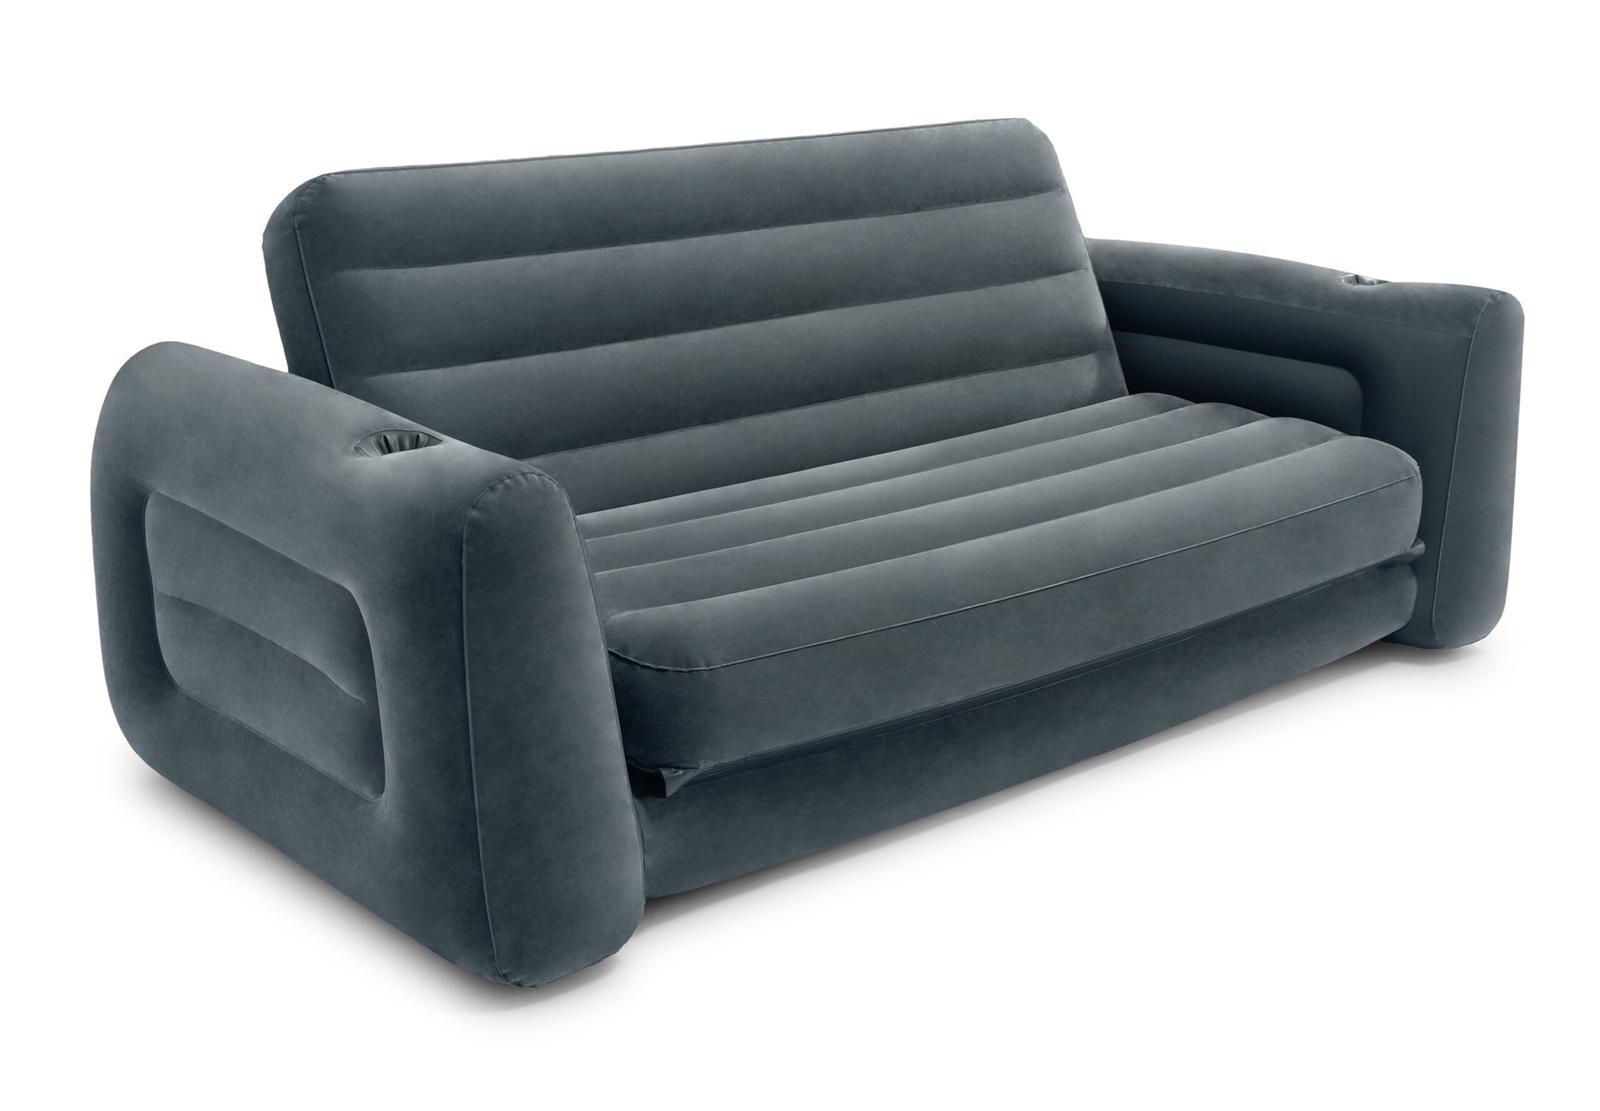 Sofa dmuchana rozkładana łóżko materac 2w1 INTEX 66552 0 Full Screen